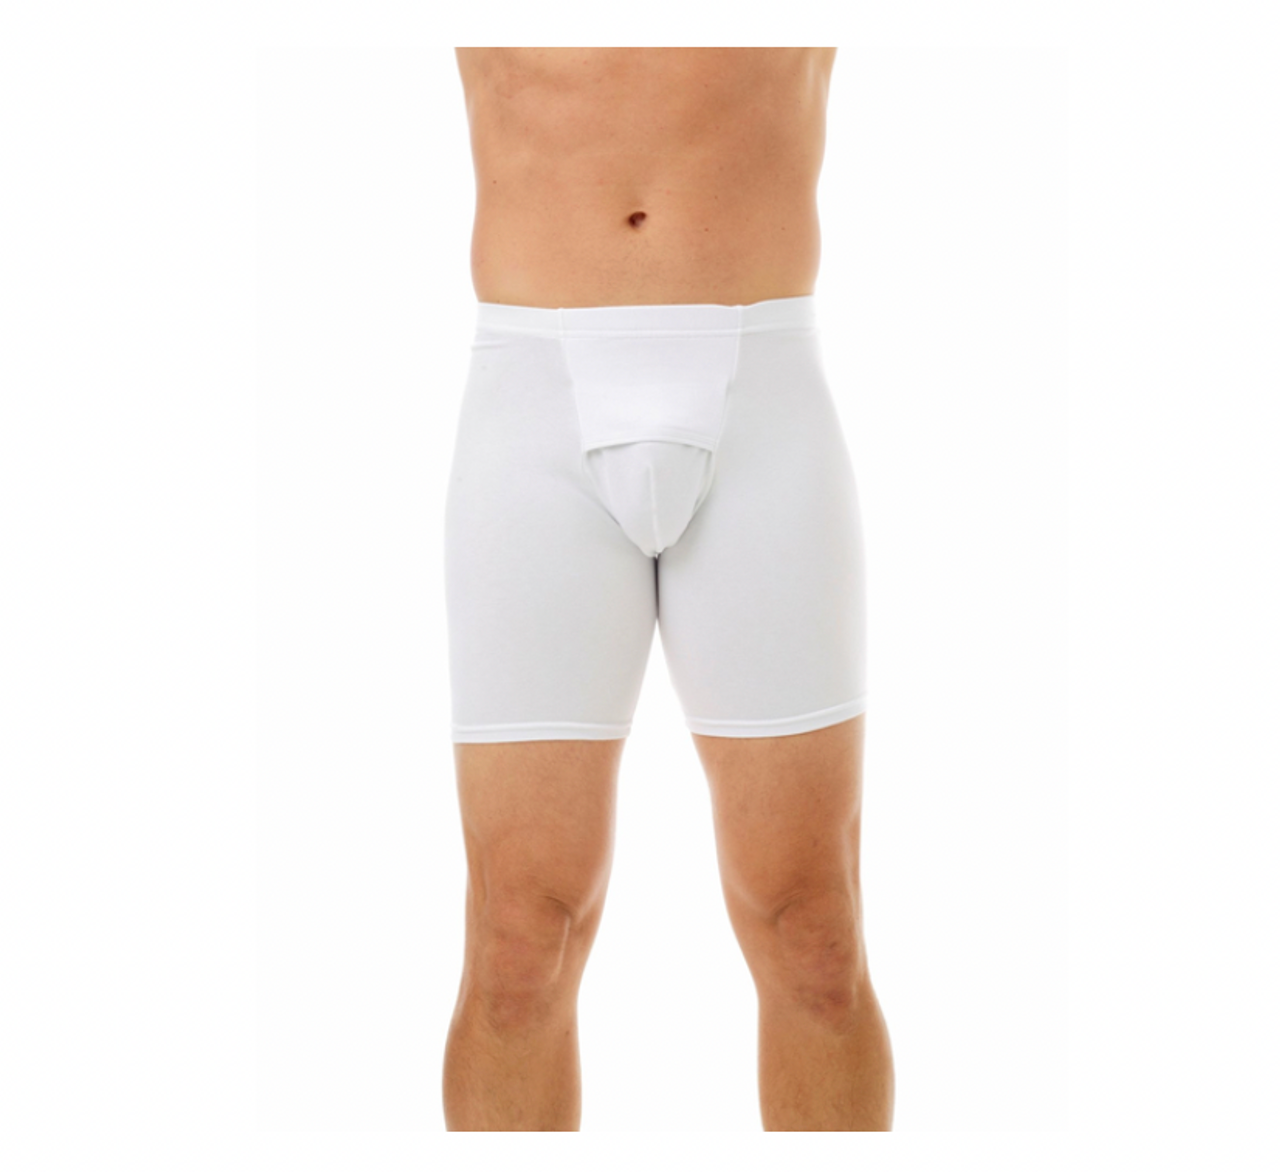 3 inch Polyester-Spandex Medical Trunk REG Support Underwear for Men